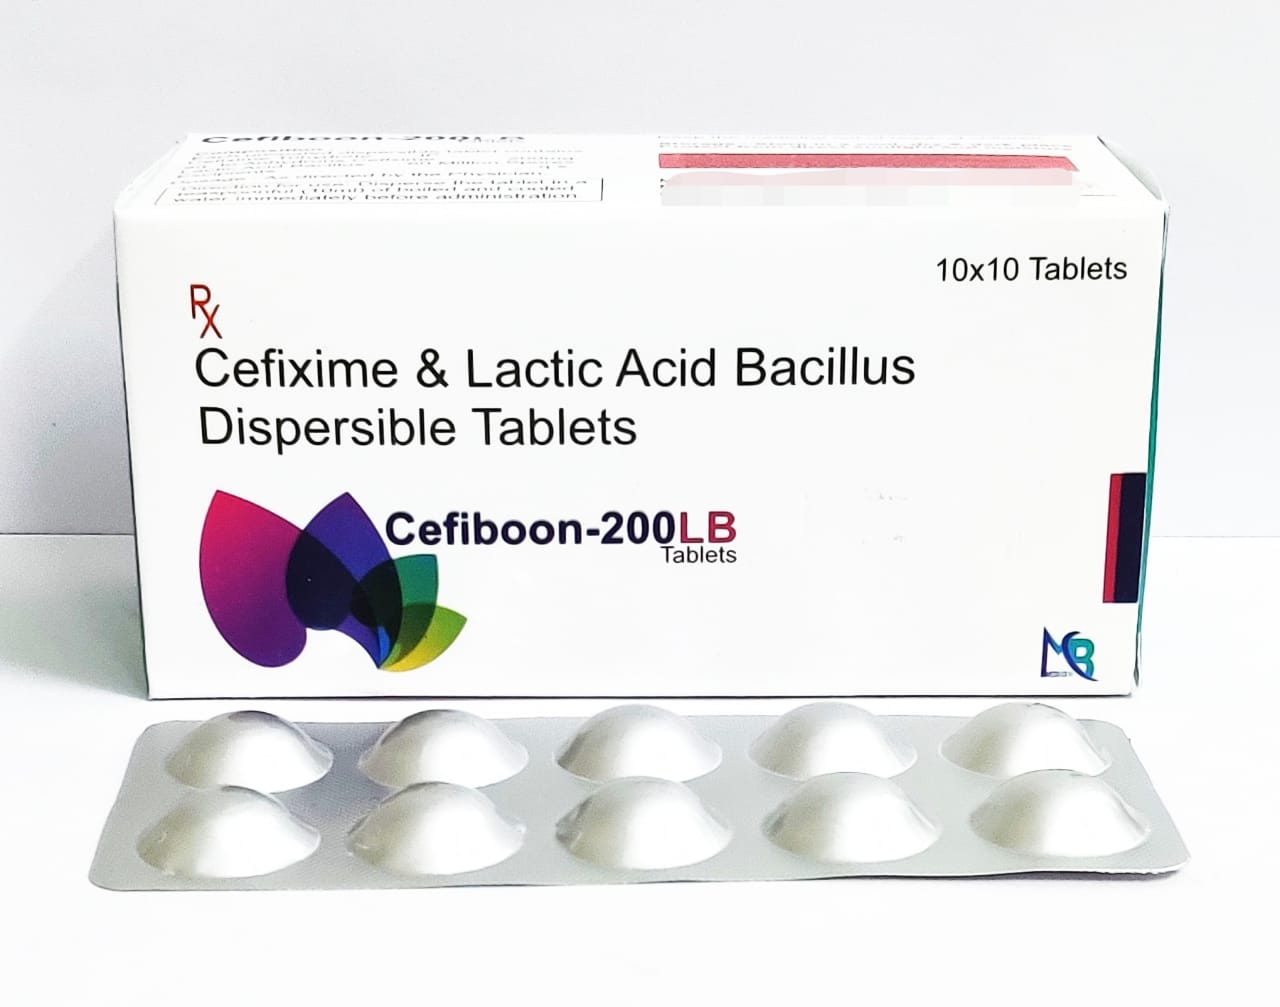 Cefaboon-200 LB Tablets